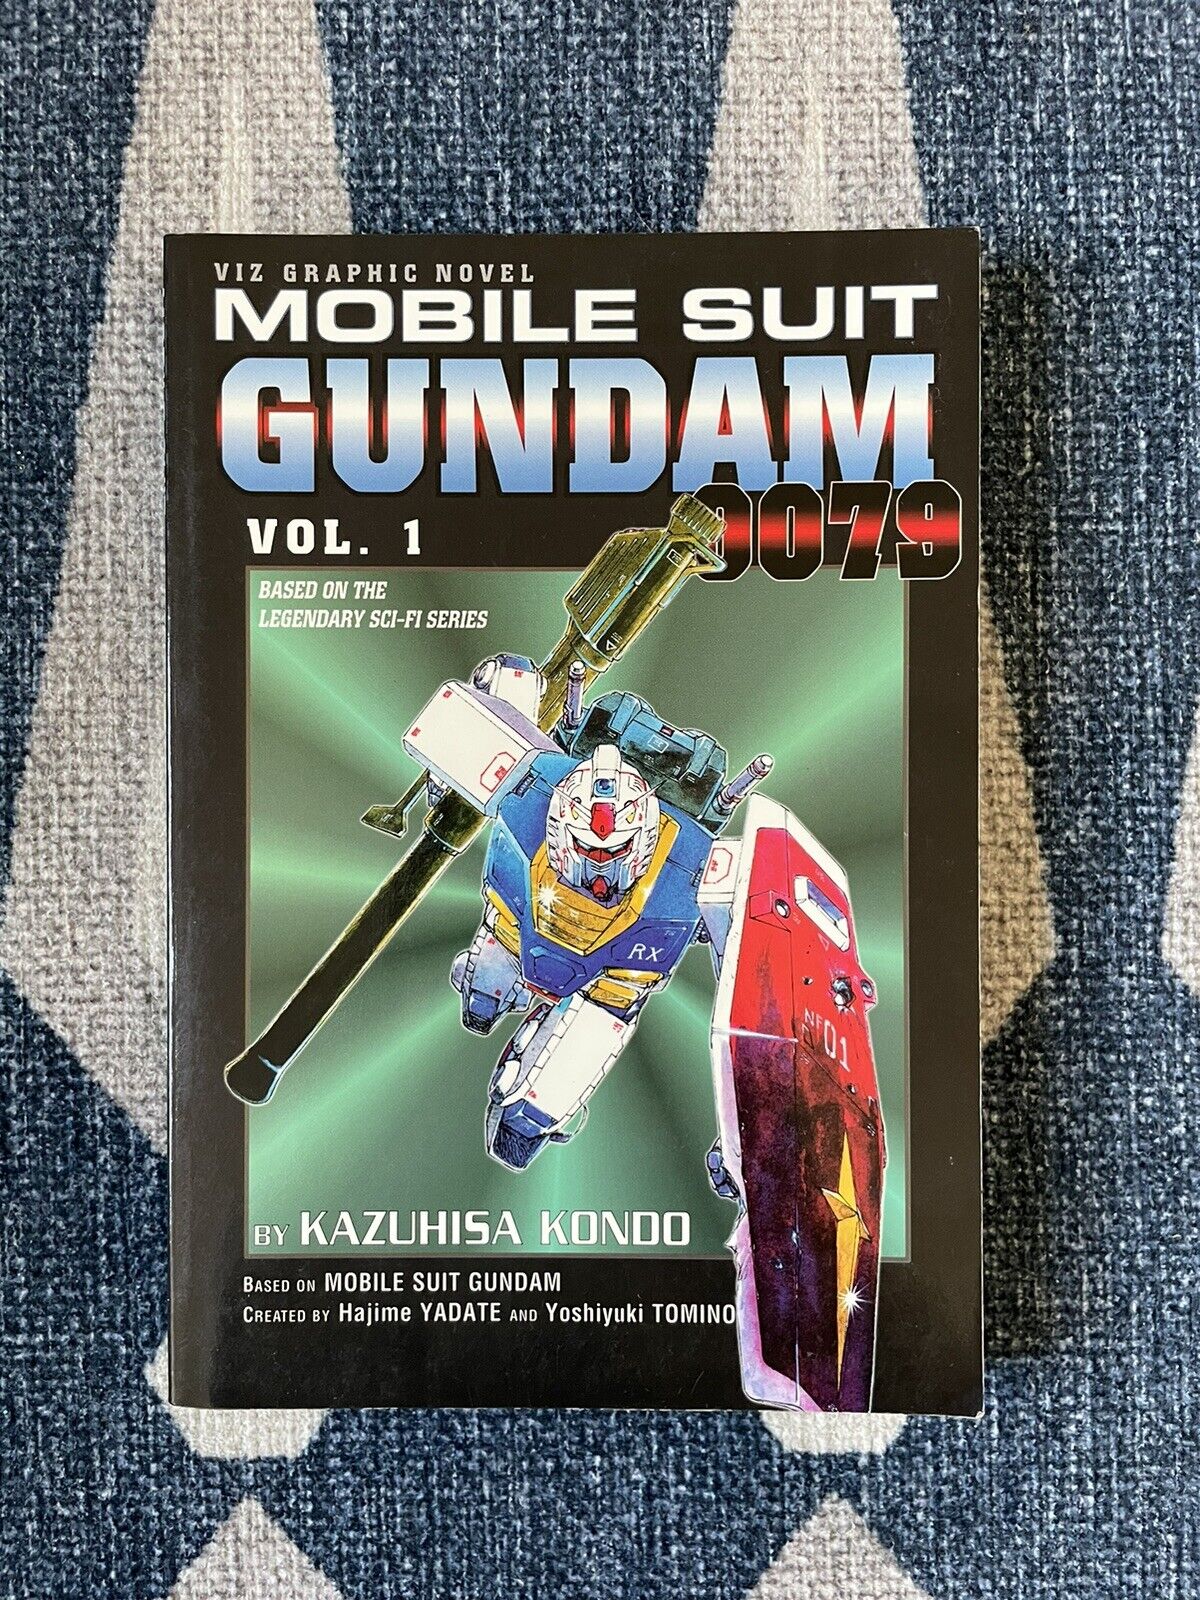 Mobile Suit Gundam 0079 by Kazuhisa Kondo (2001, vol. 1)